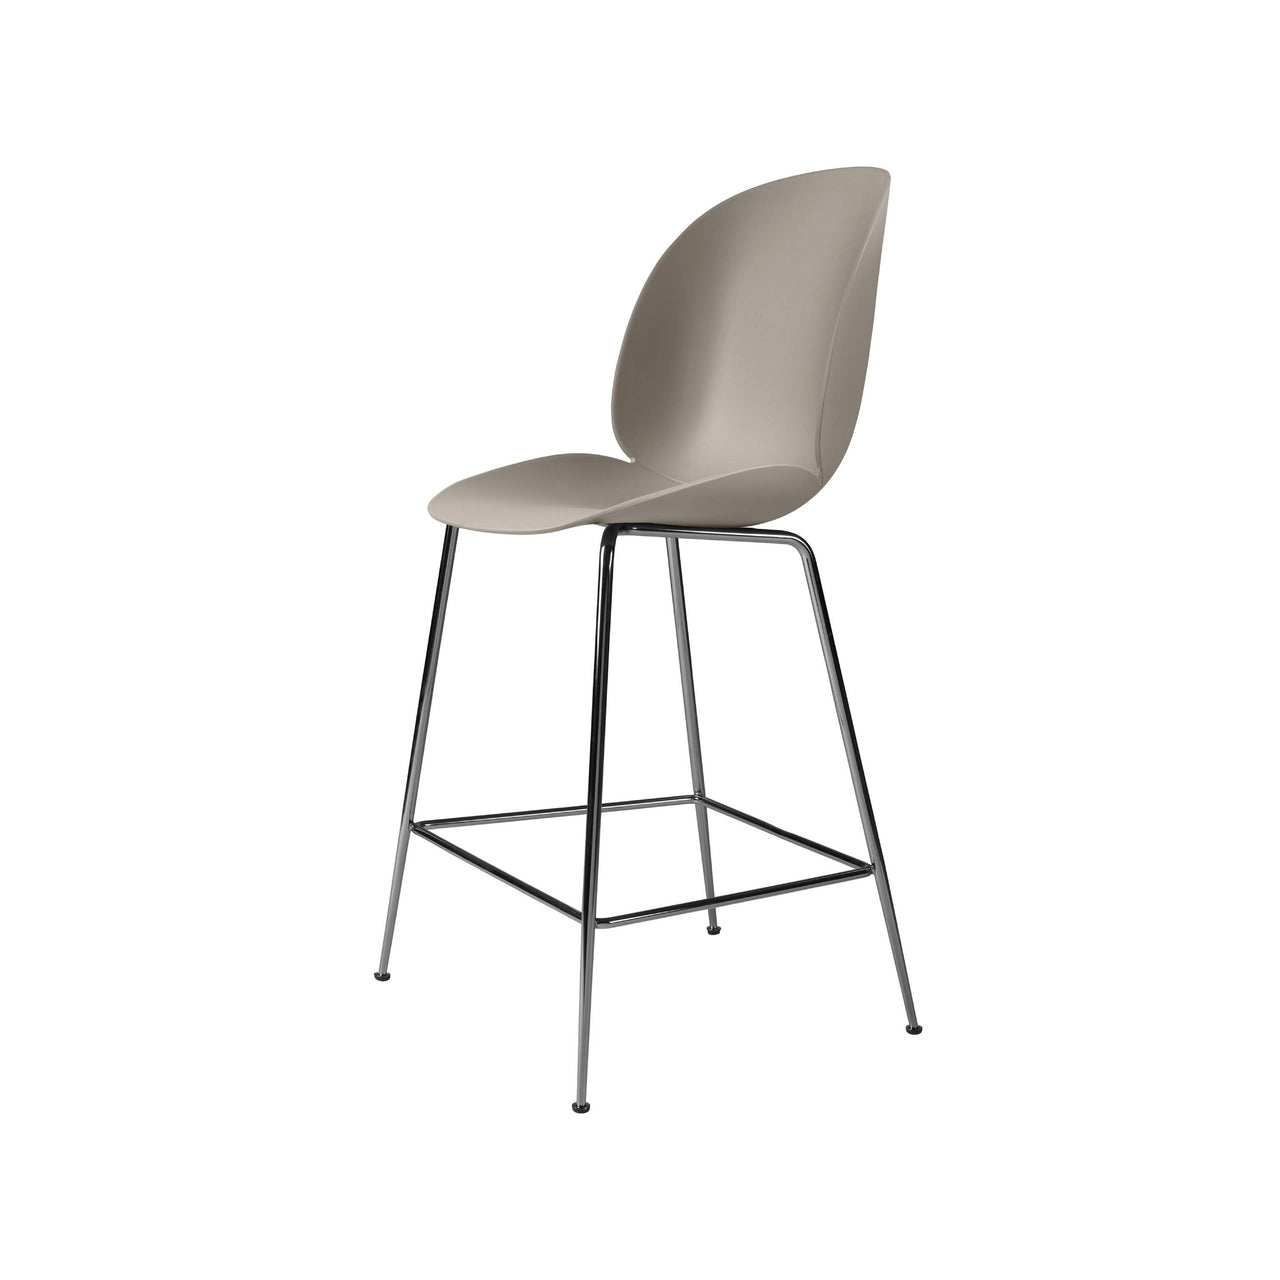 Beetle Bar + Counter Chair: Counter + New Beige + Black Chrome